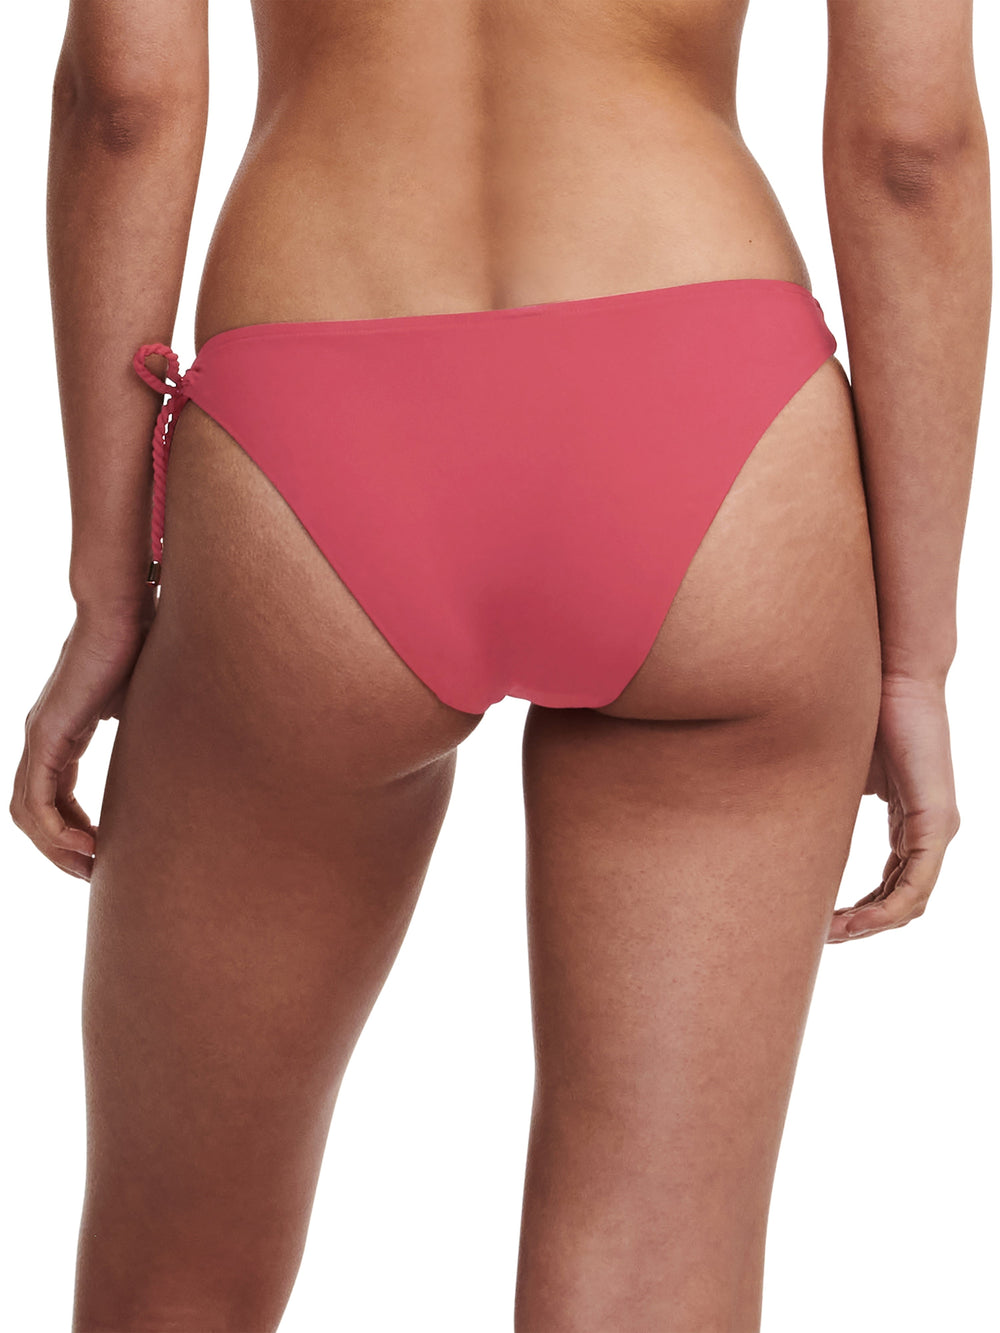 Chantelle Swimwear Inspire Bikini - Гранатово-красное бикини с полной чашкой Chantelle